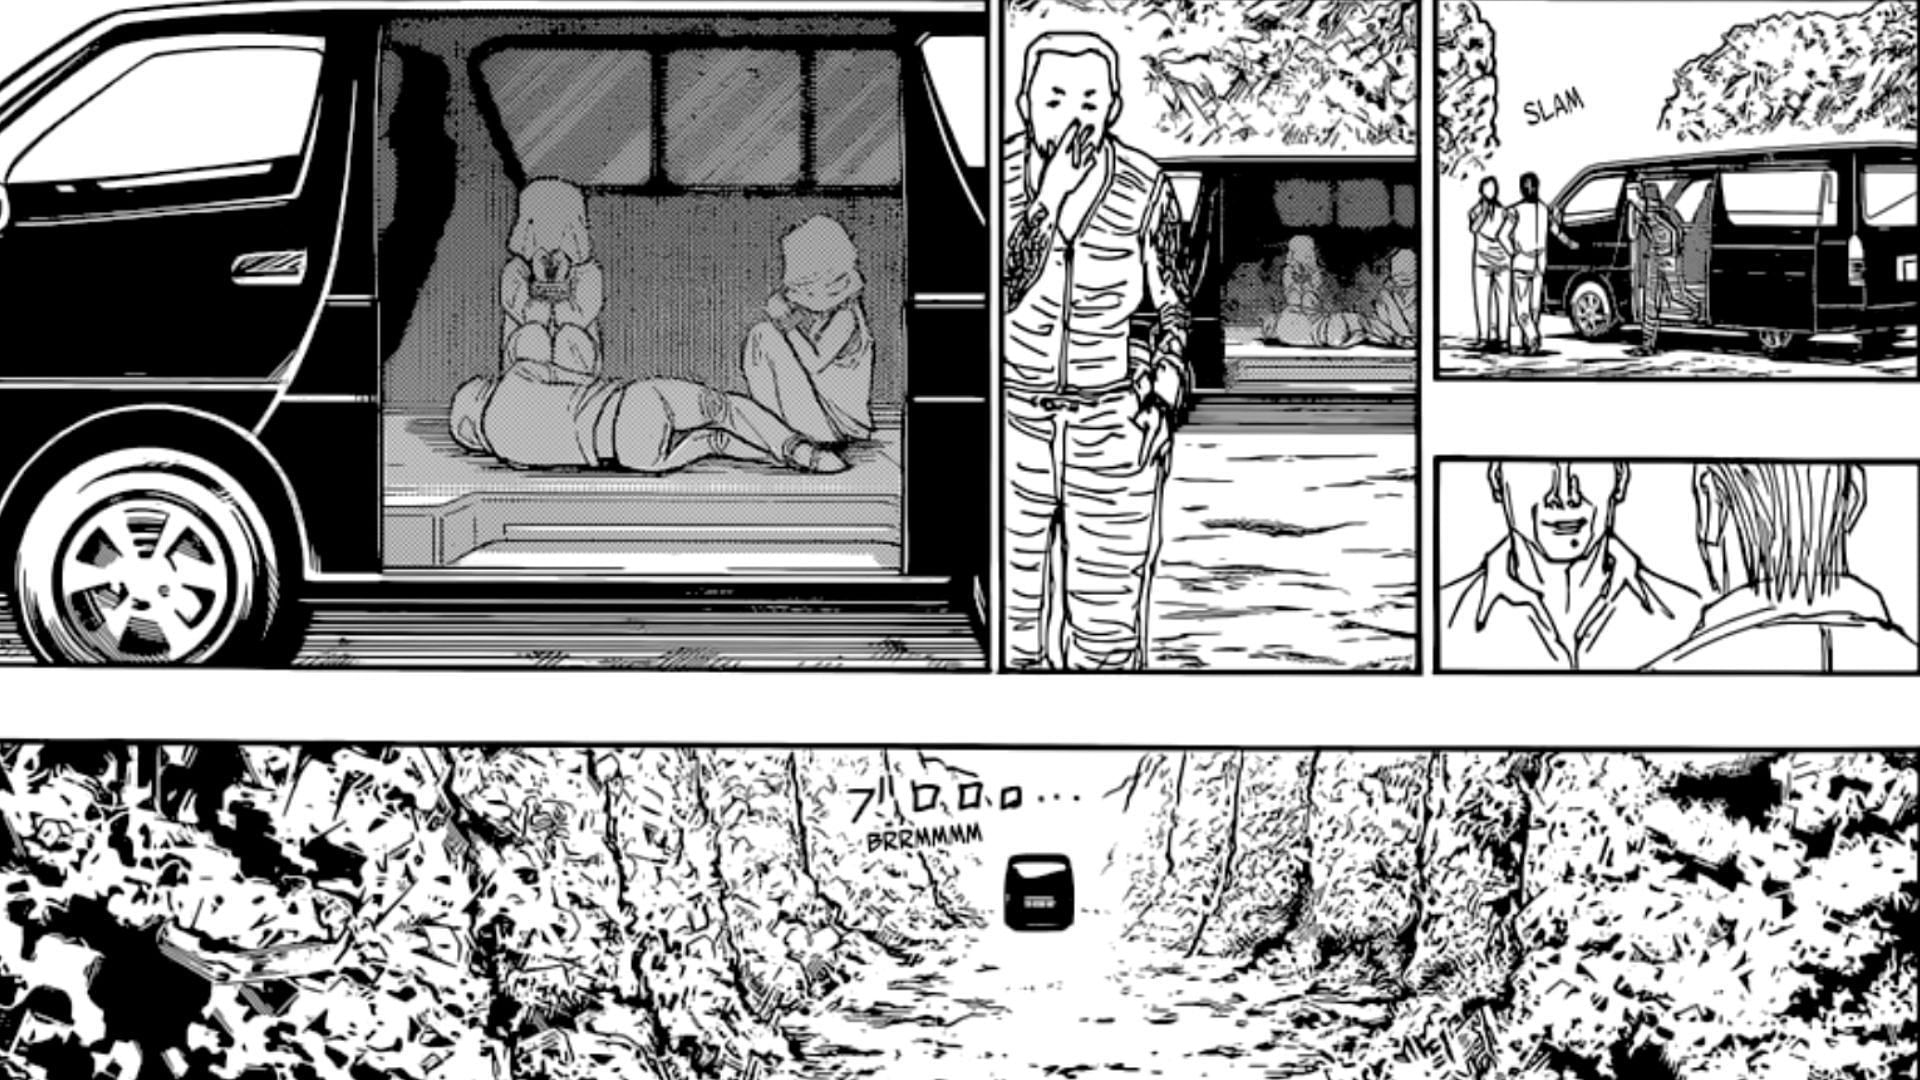 The children getting kidnapped in Hunter x Hunter chapter 395 (Image via Shueisha)